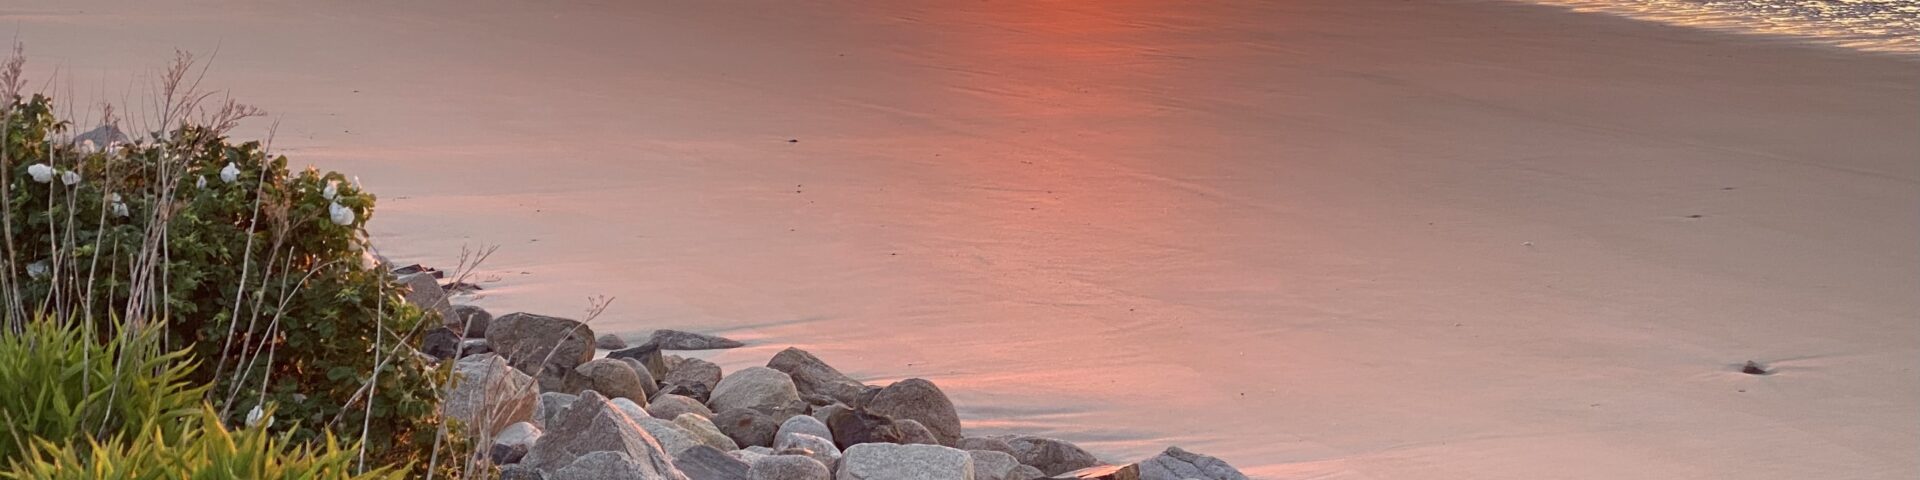 people Ogunquit beach red sunrise